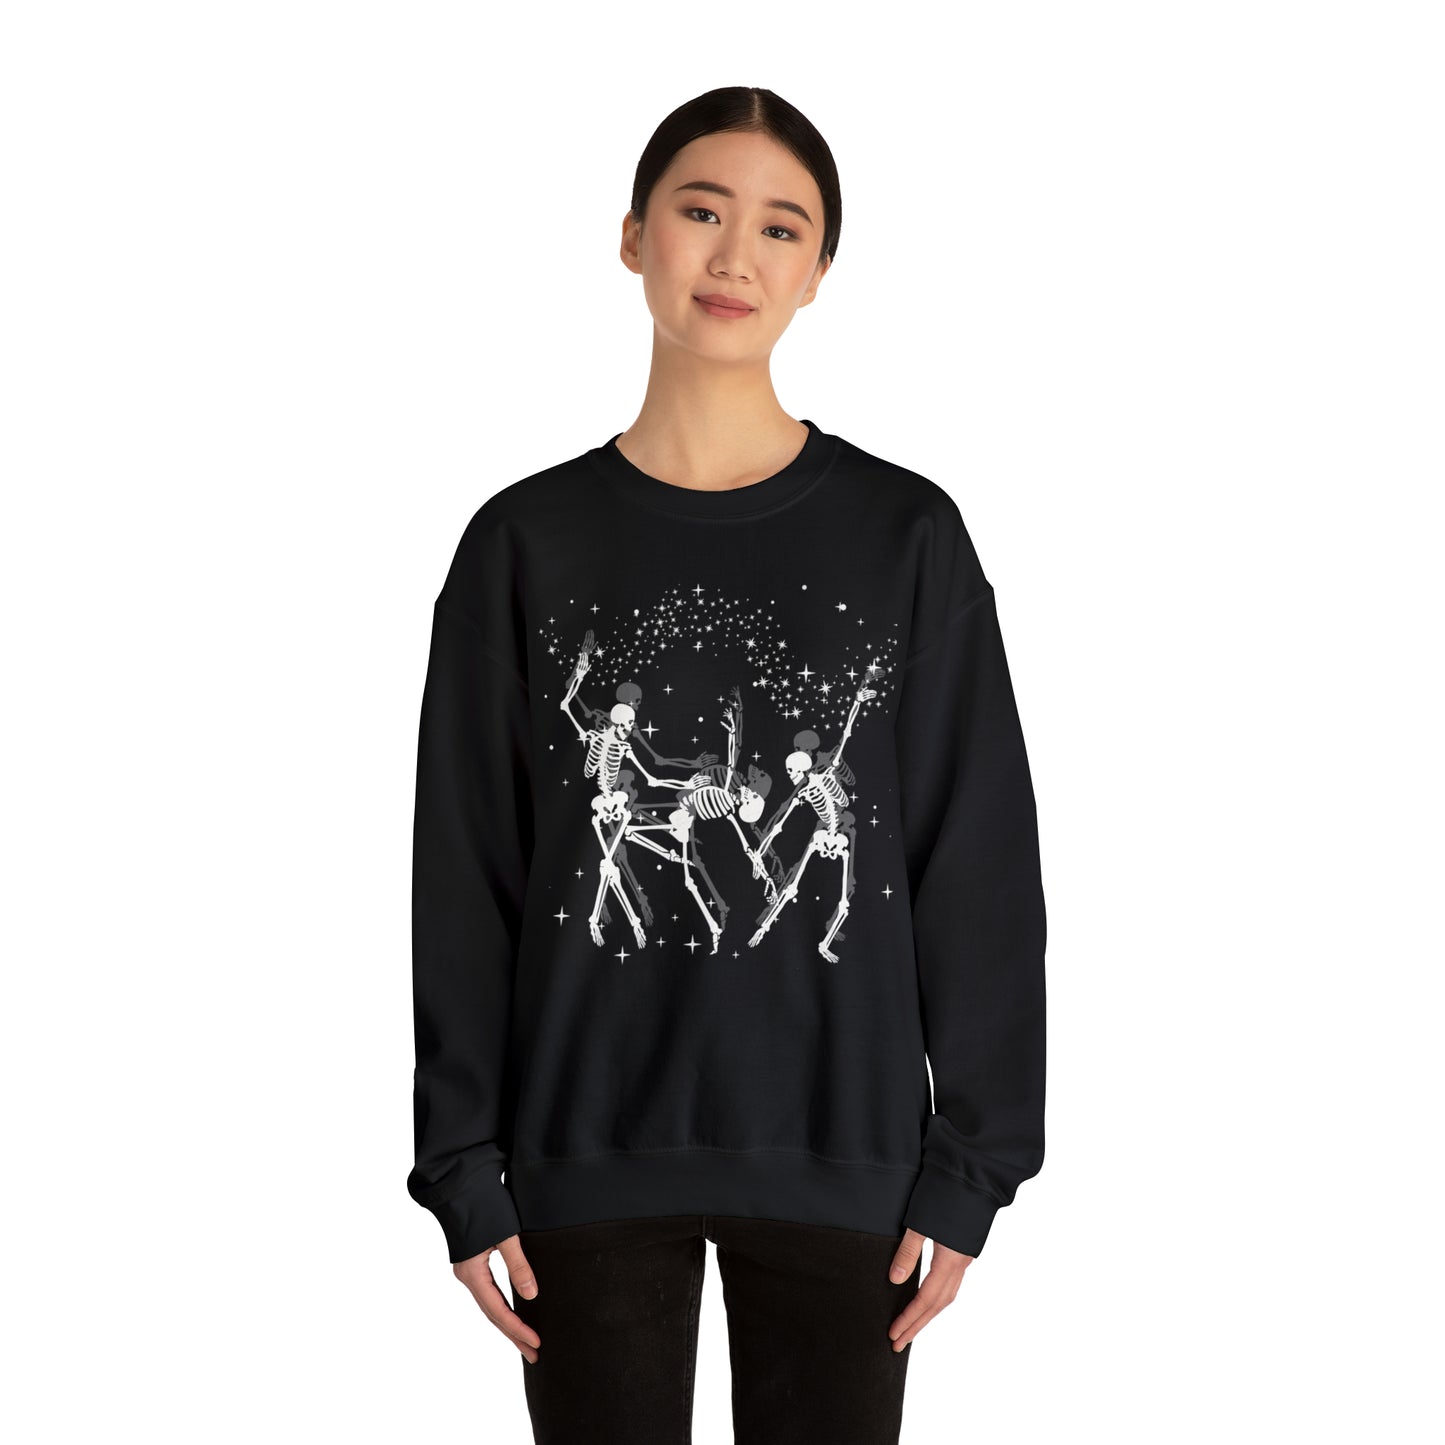 Adult "Dancing Skeletons" Unisex Crewneck Sweatshirt